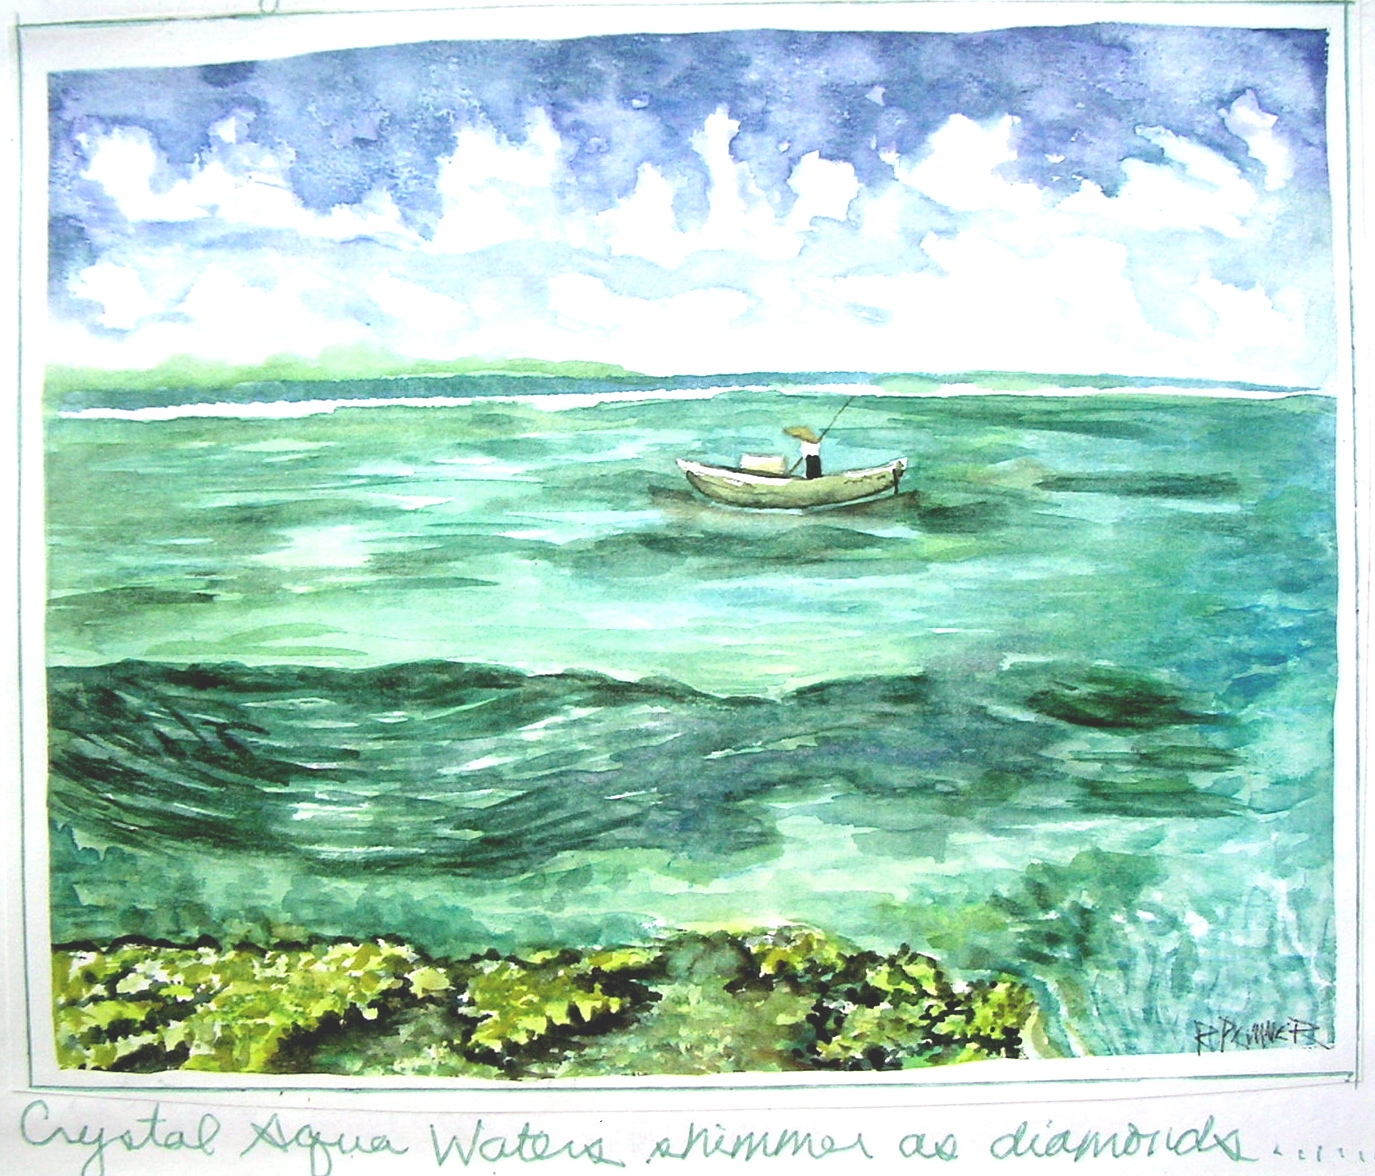 Okinawa watercolor